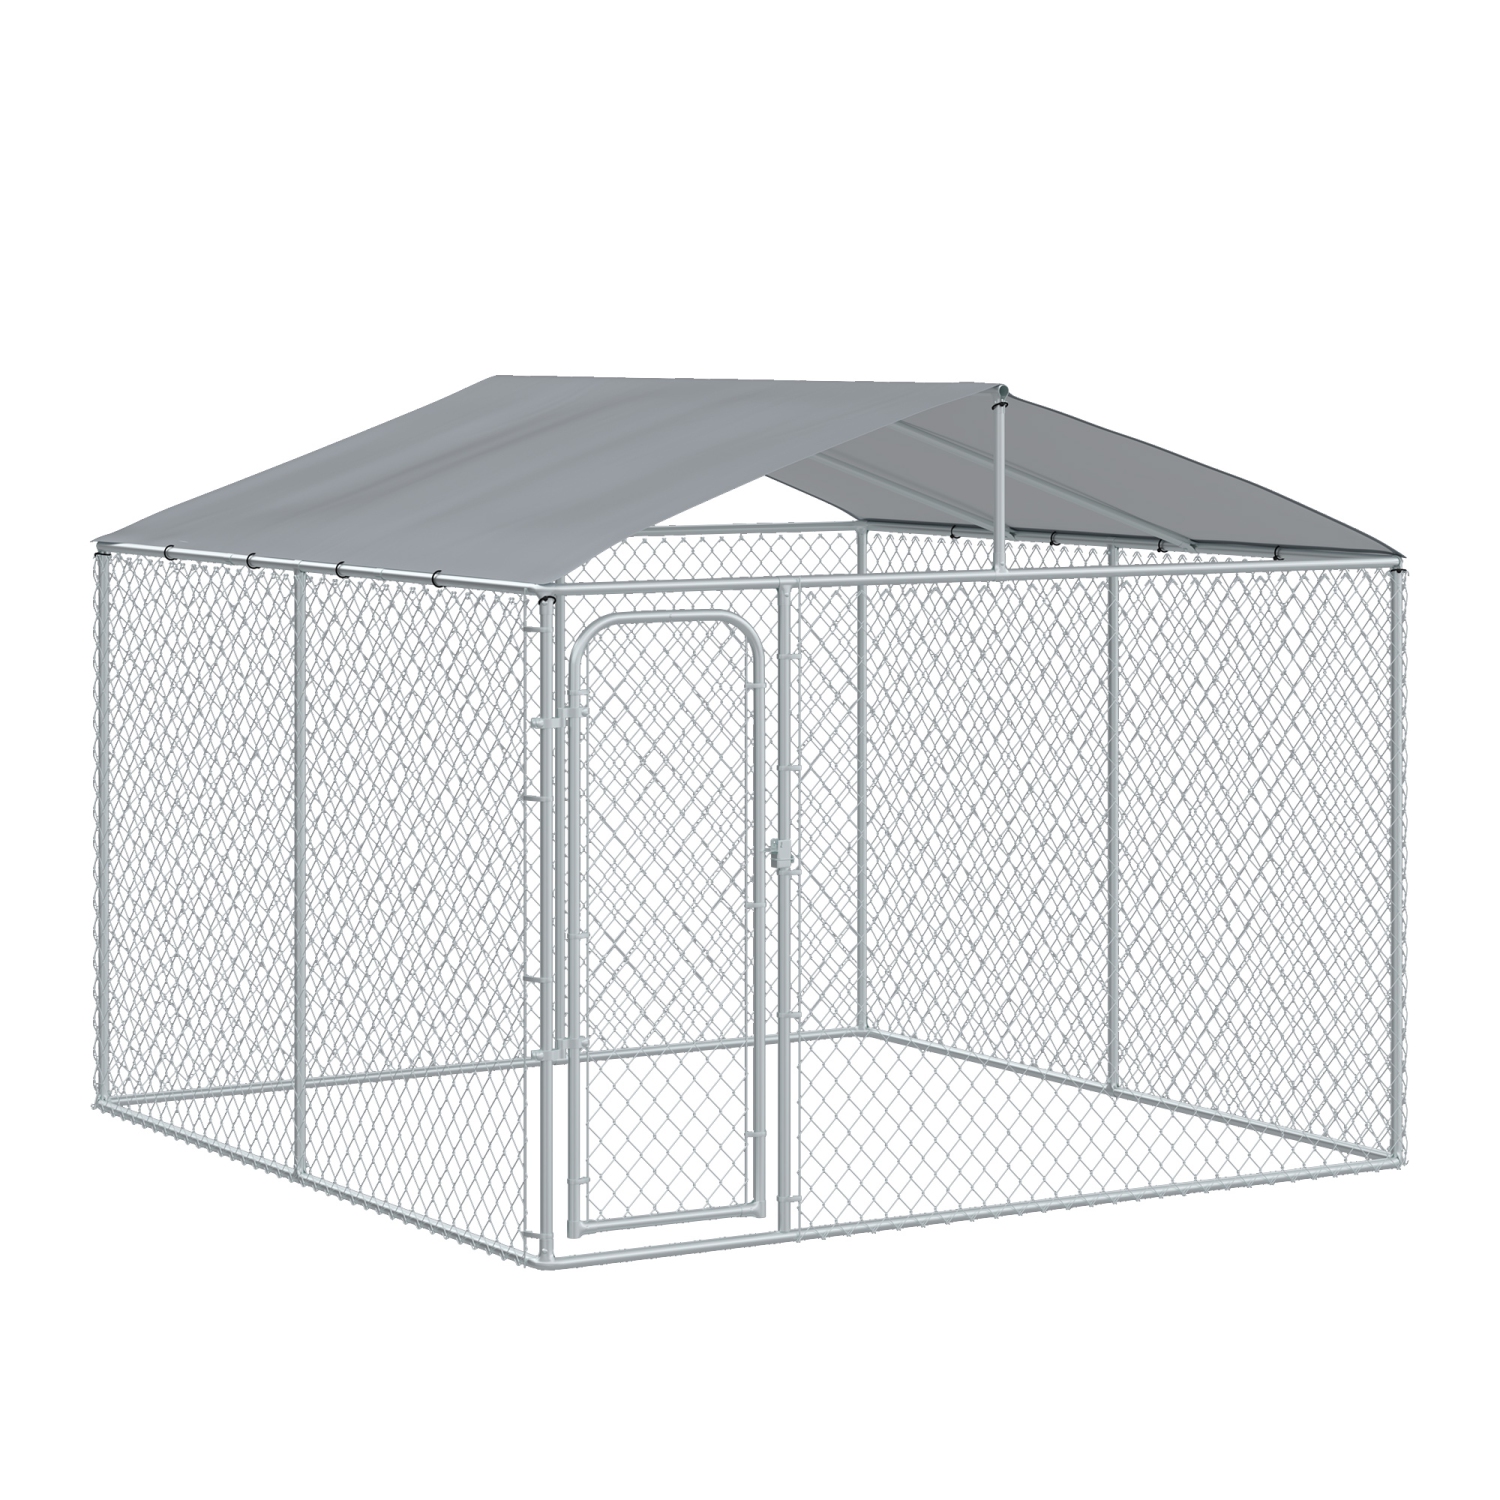 PawHut Dog Kennel Outdoor Run Fence with Roof, Steel Lock, Mesh Sidewalls for Backyard & Patio, 9.8' x 9.8' x 7.7'